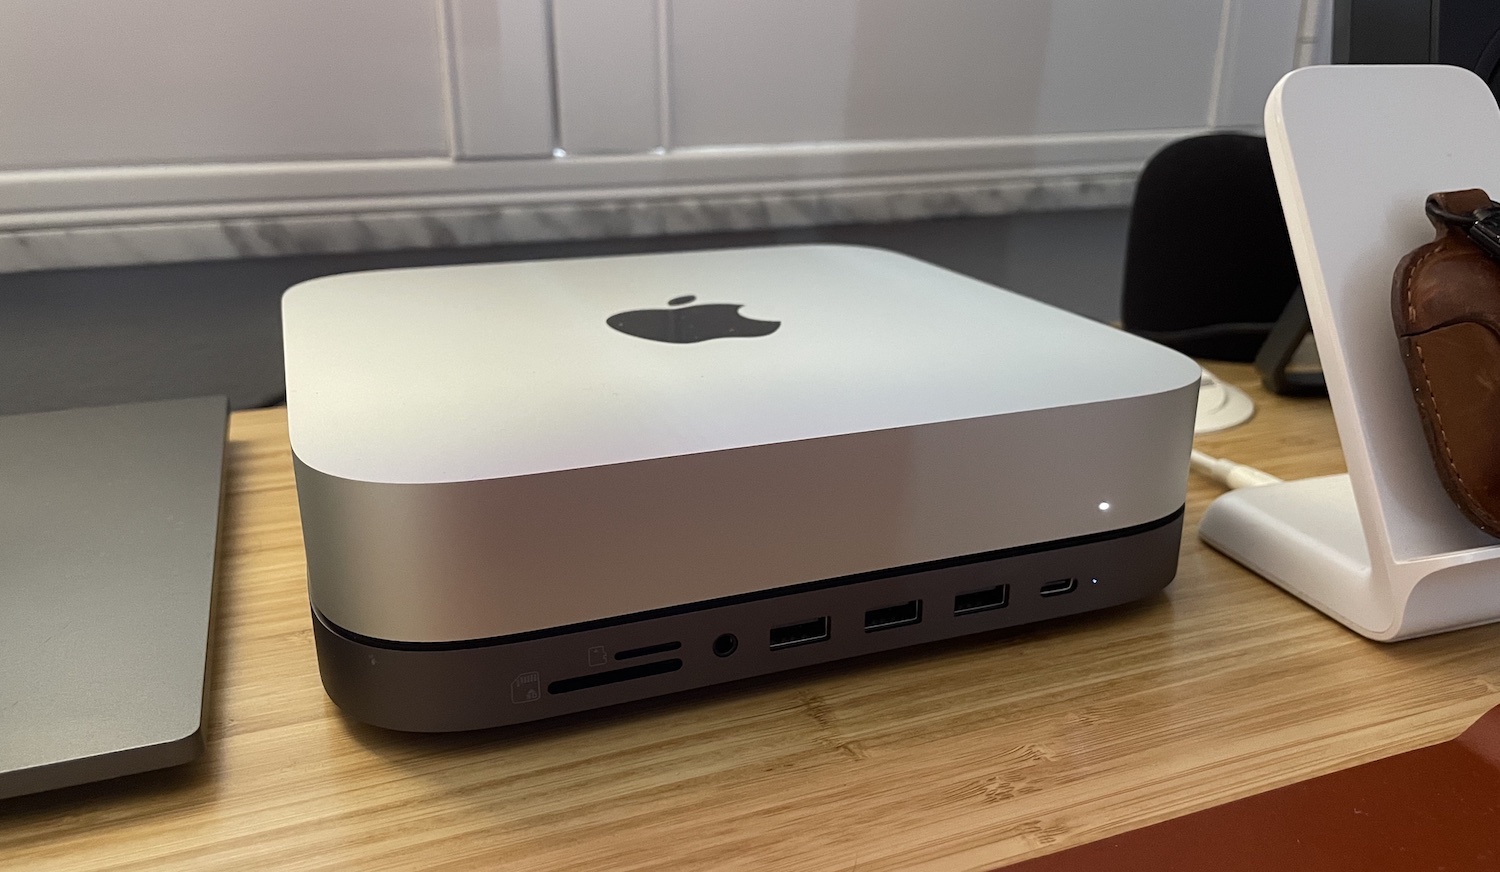 mac mini m1 upgradeable